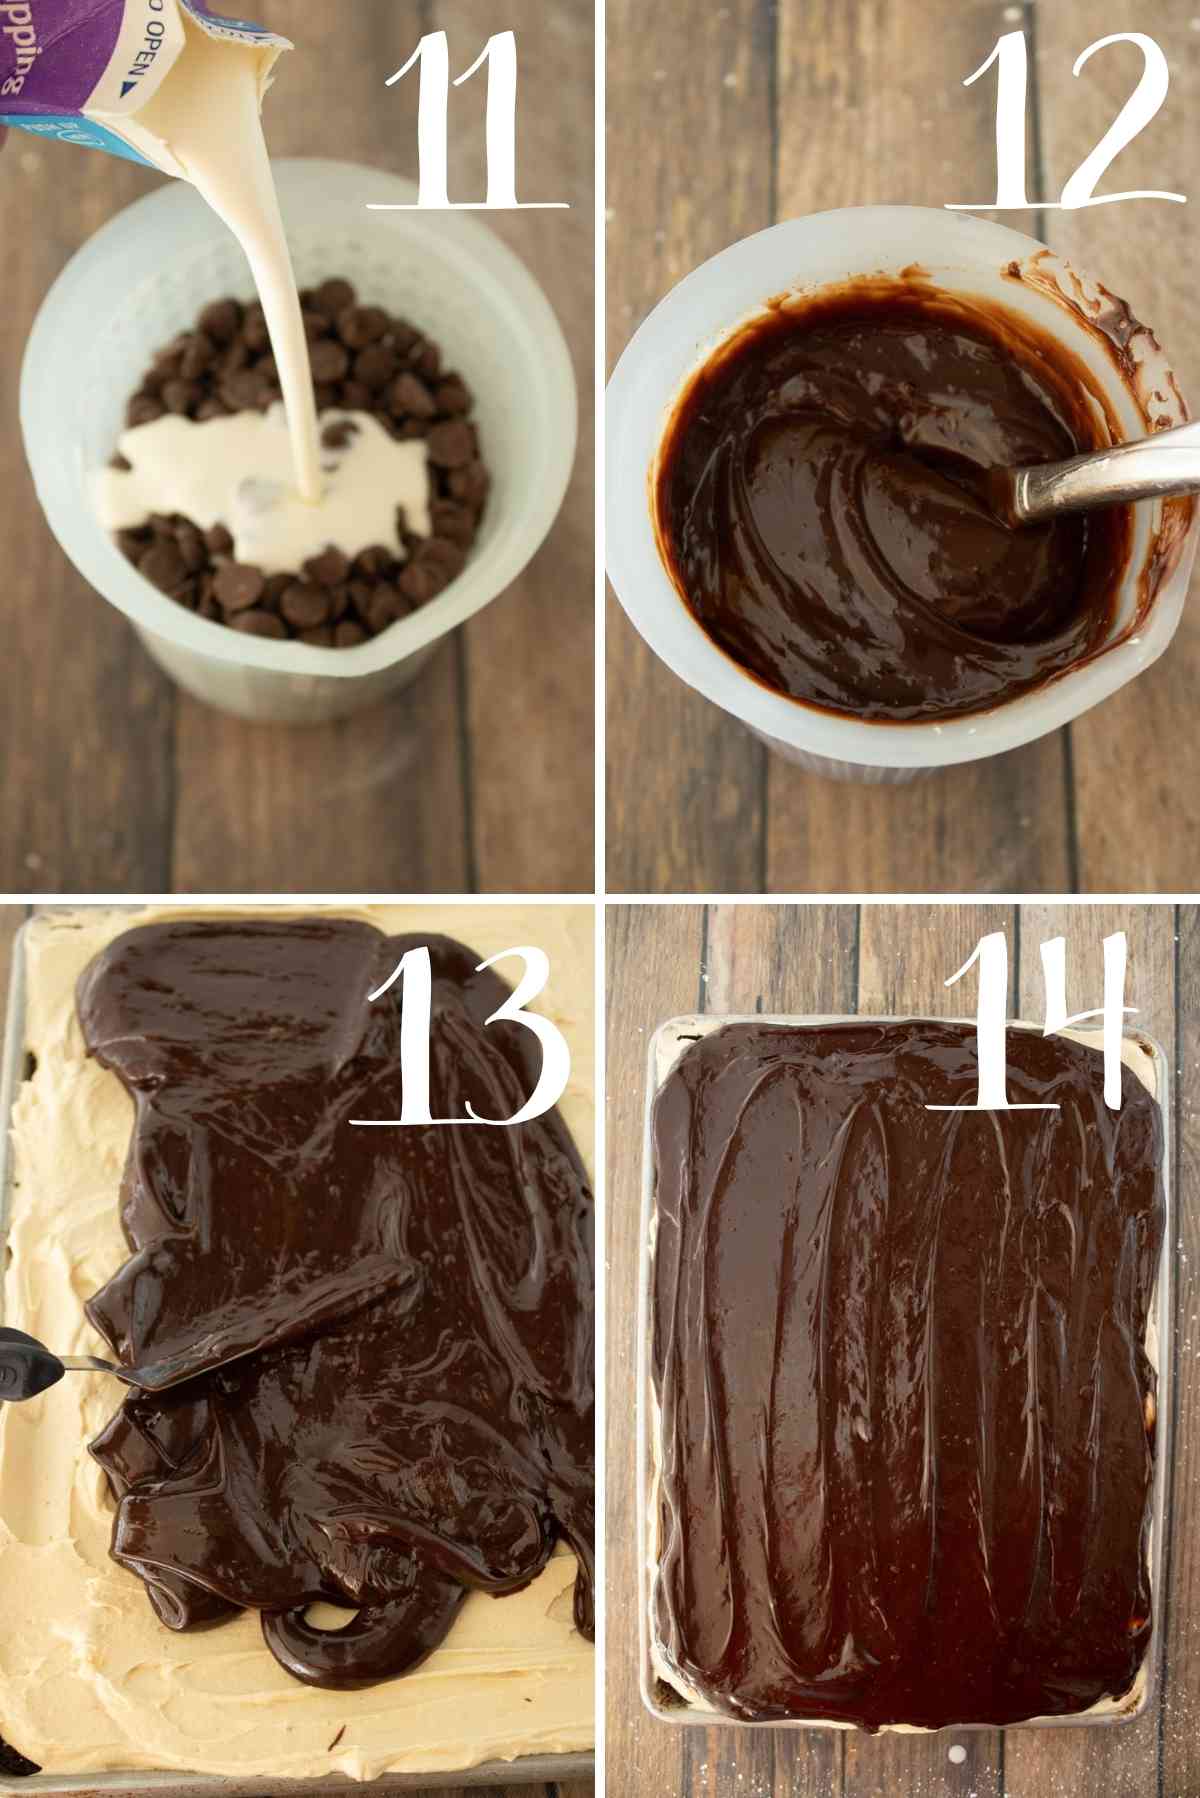 Use a good quality chocolate to make the chocolate ganache!